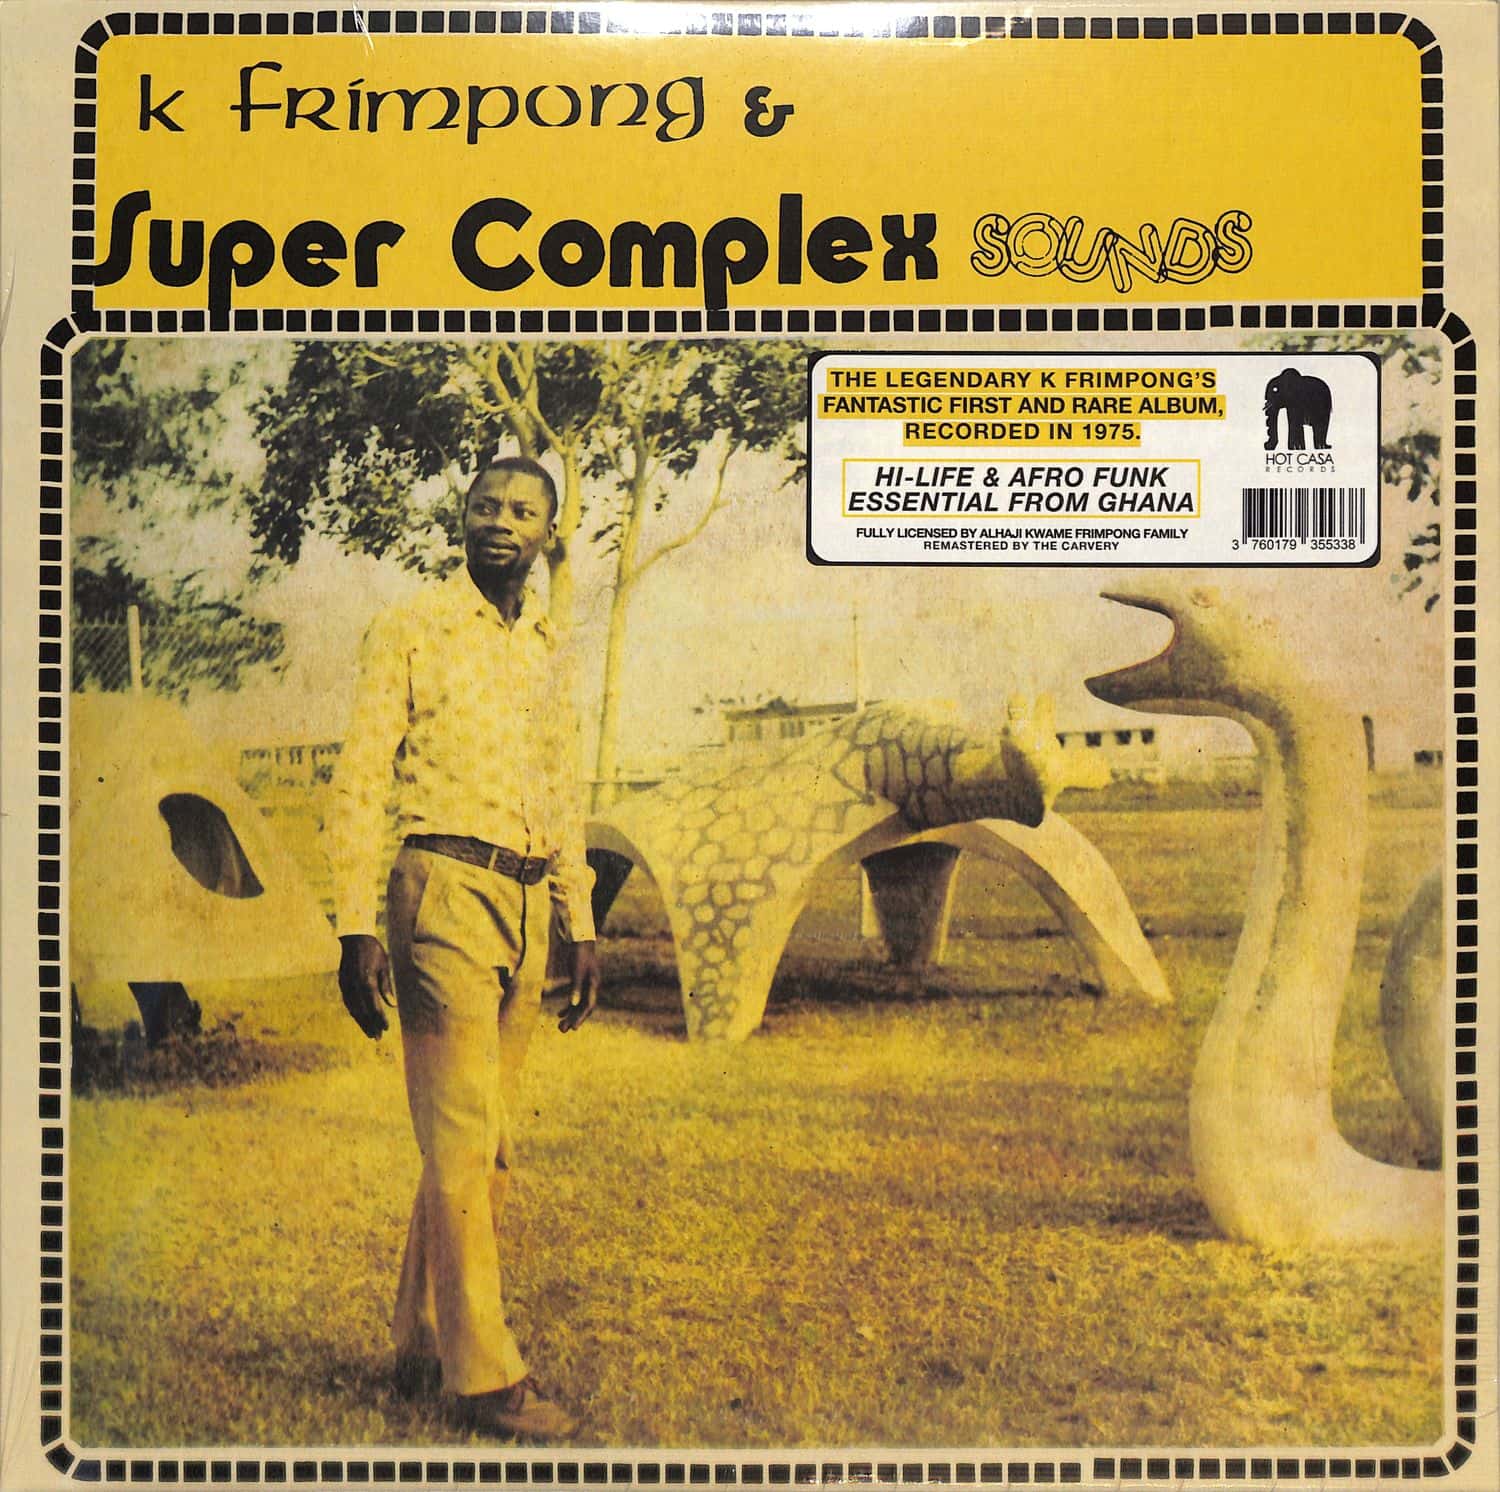 K. Frimpong & Super Complex Sounds - AHYEWA SPECIAL 